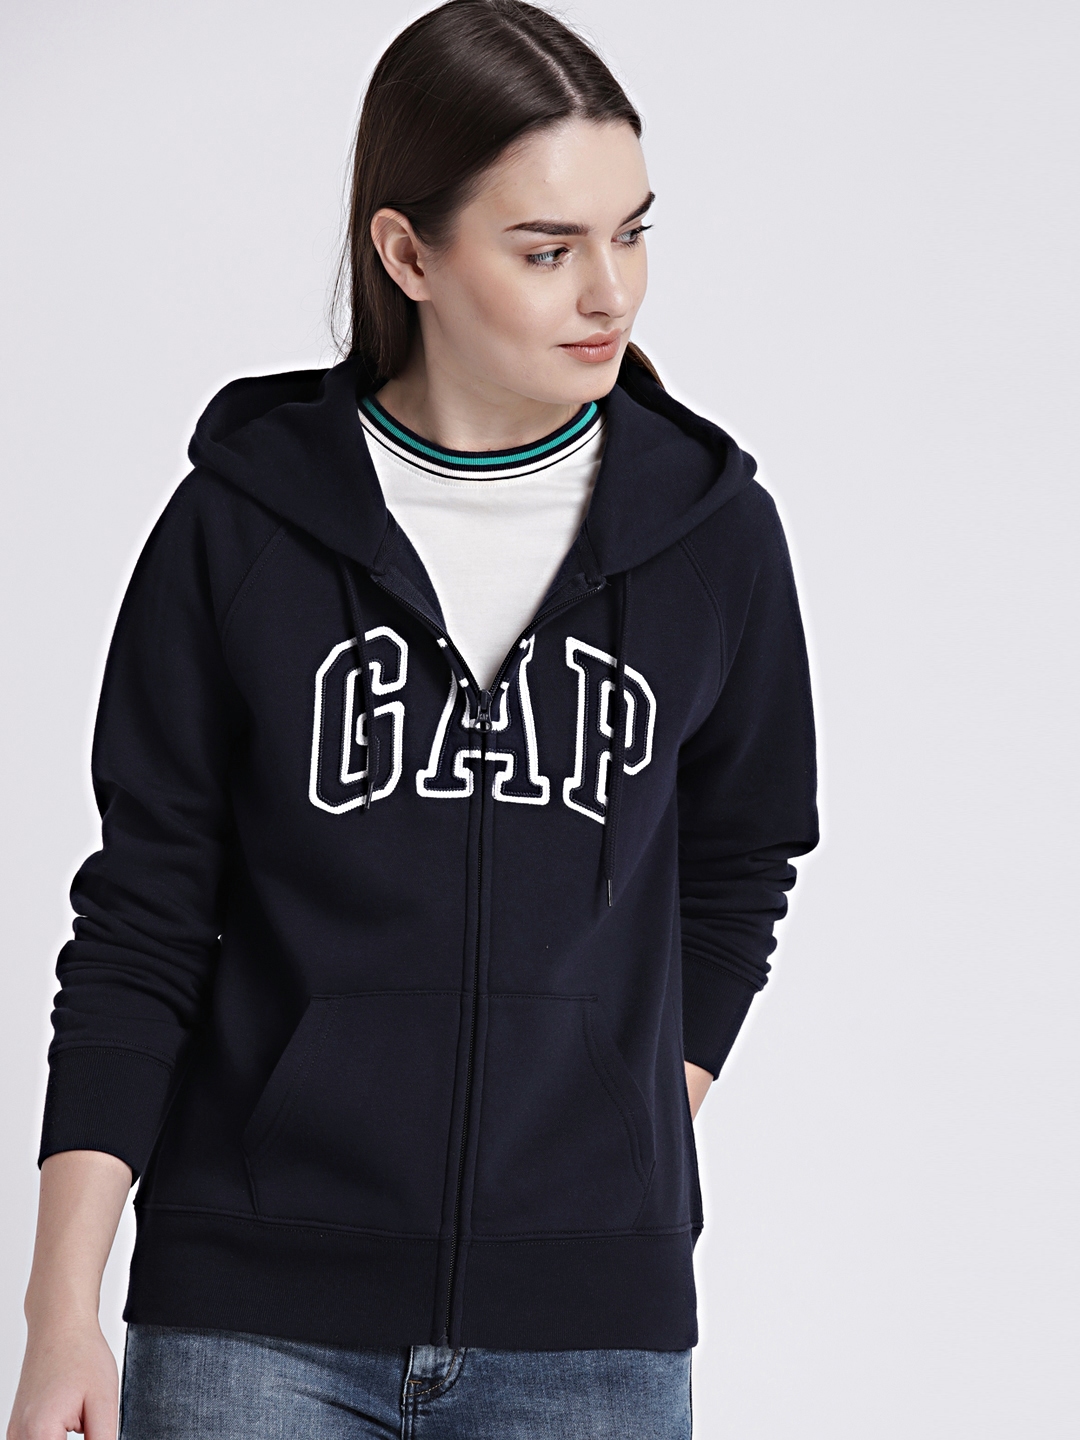 gap womens sweatshirt